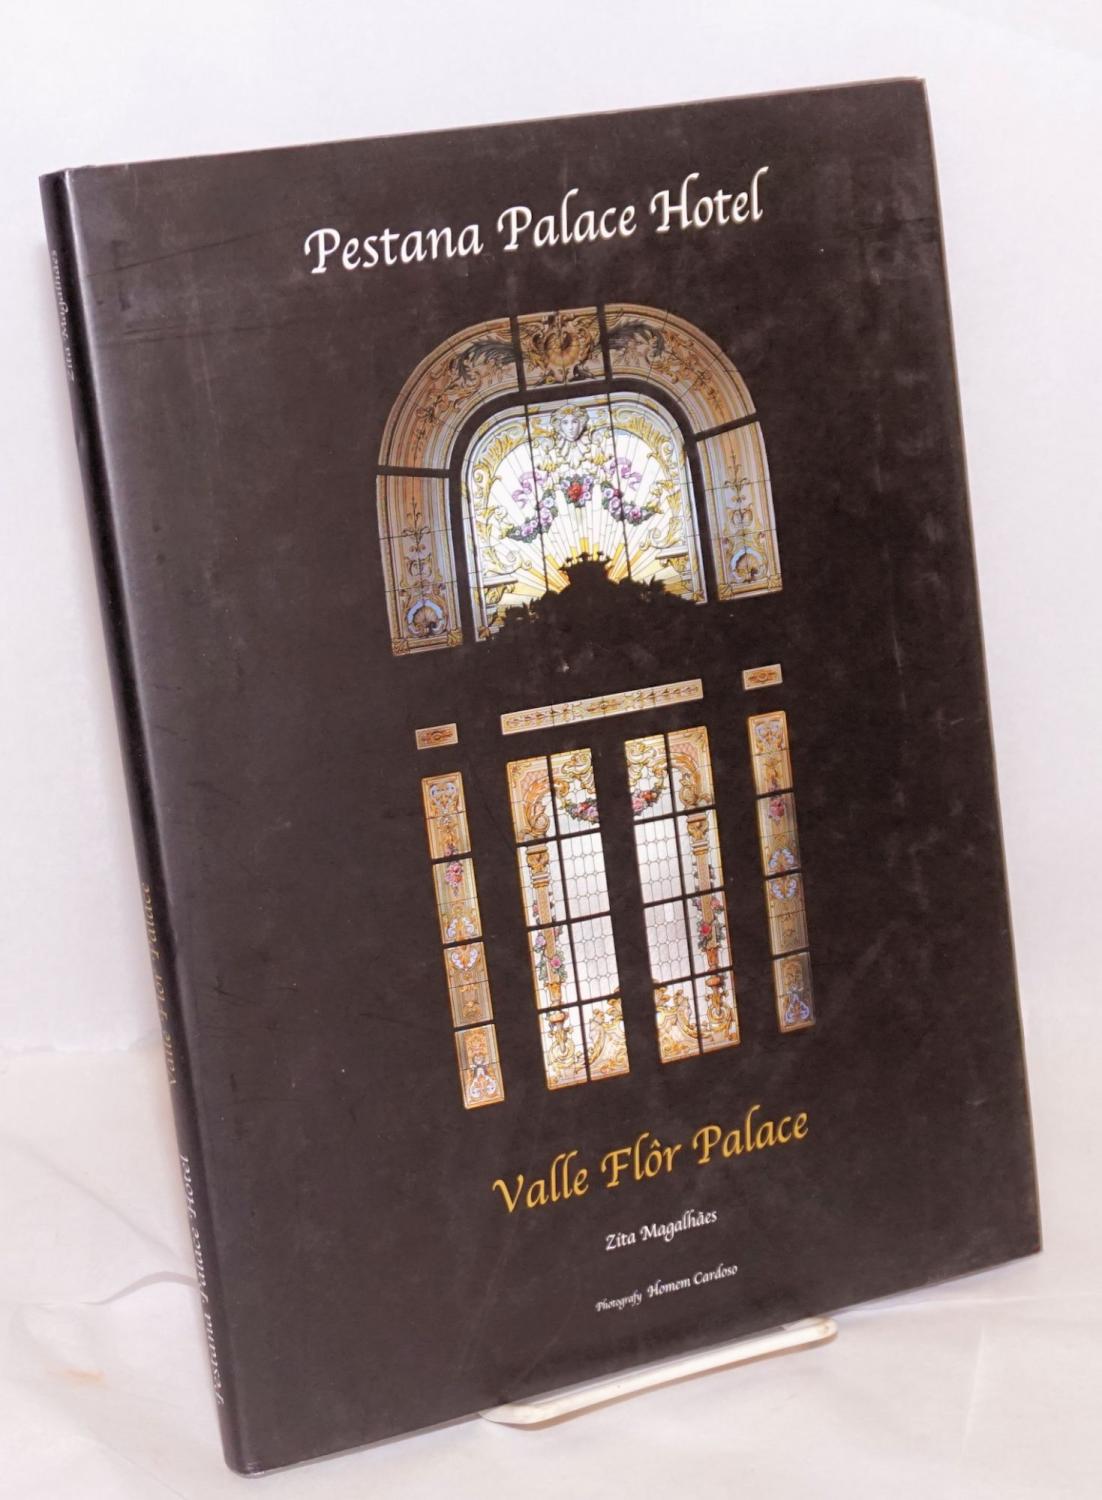 Pestana Palace Hotel: Valle Flor Palace - Magalhaes, Zita